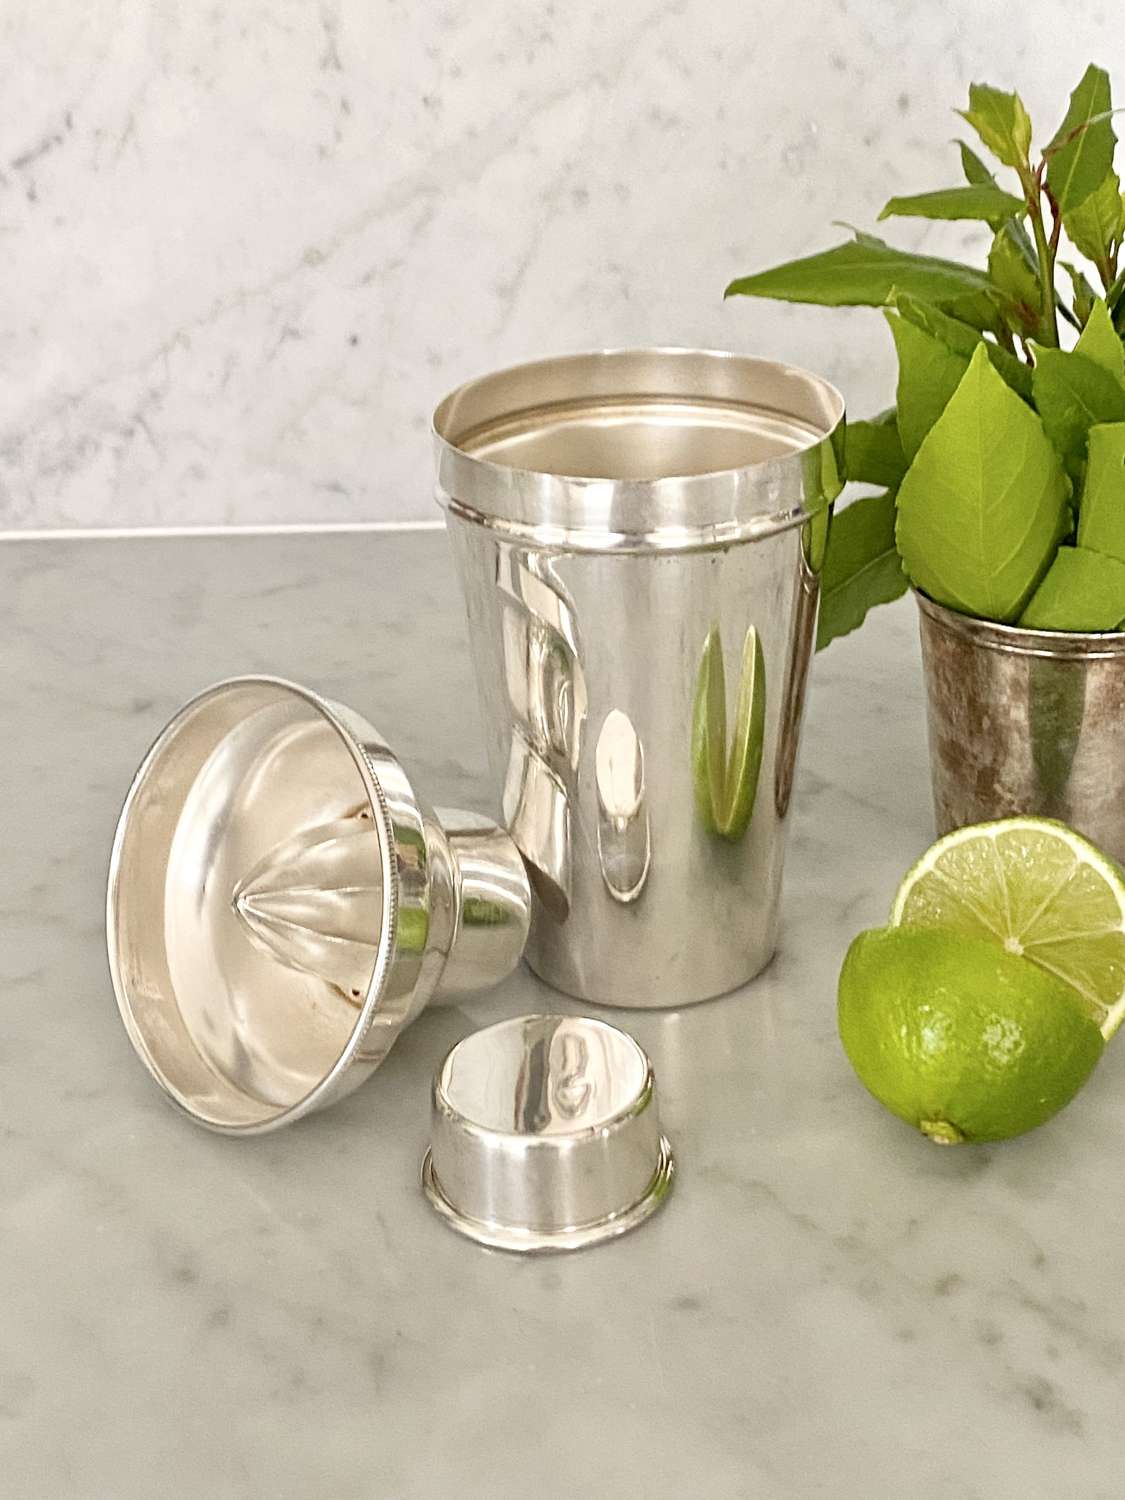 Lemon squeezer Art Deco silver plated cocktail shaker